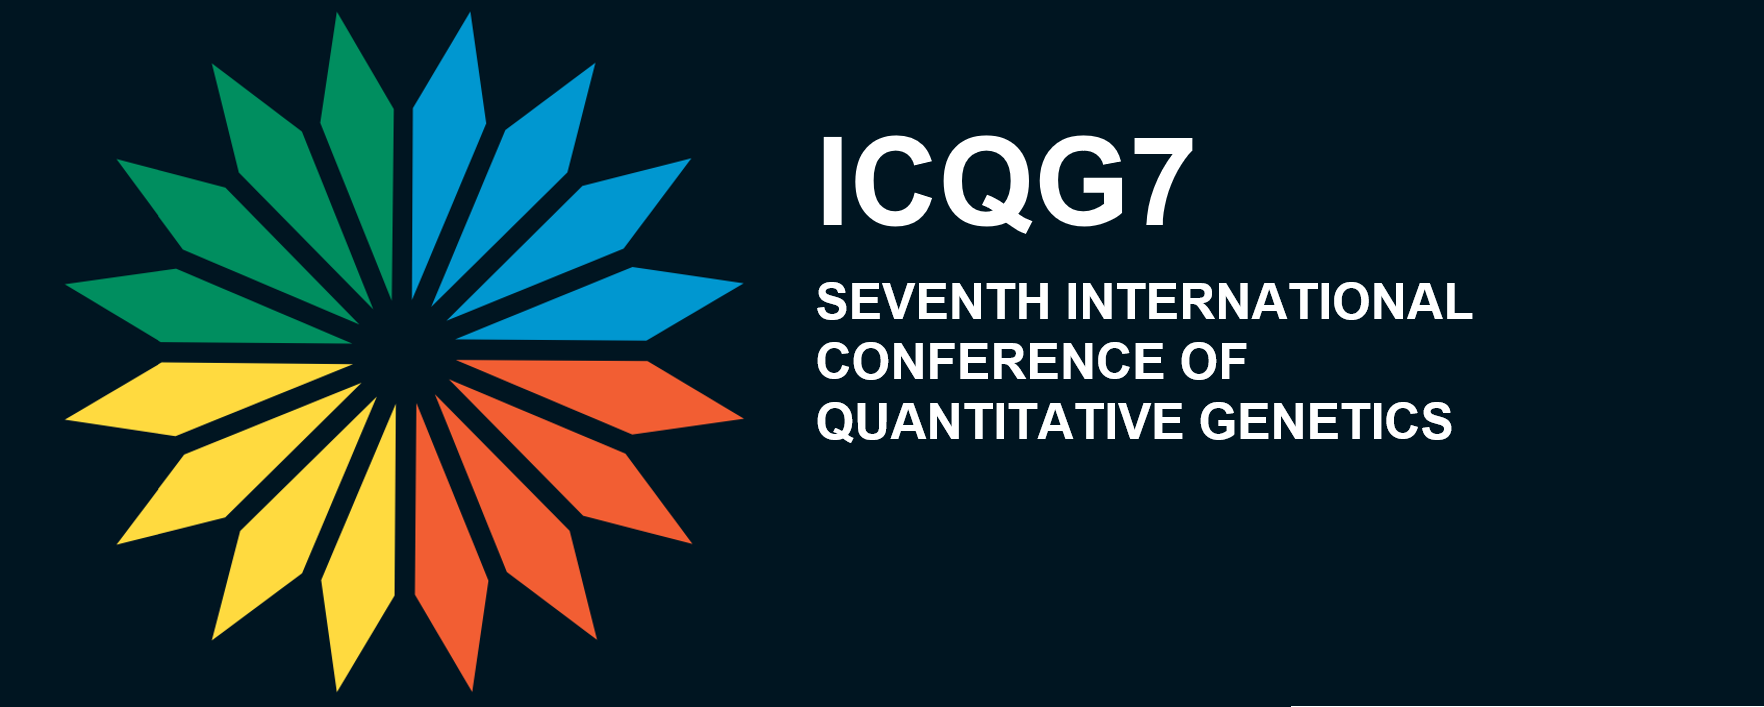 6th International Conference of Quantitative Genetics